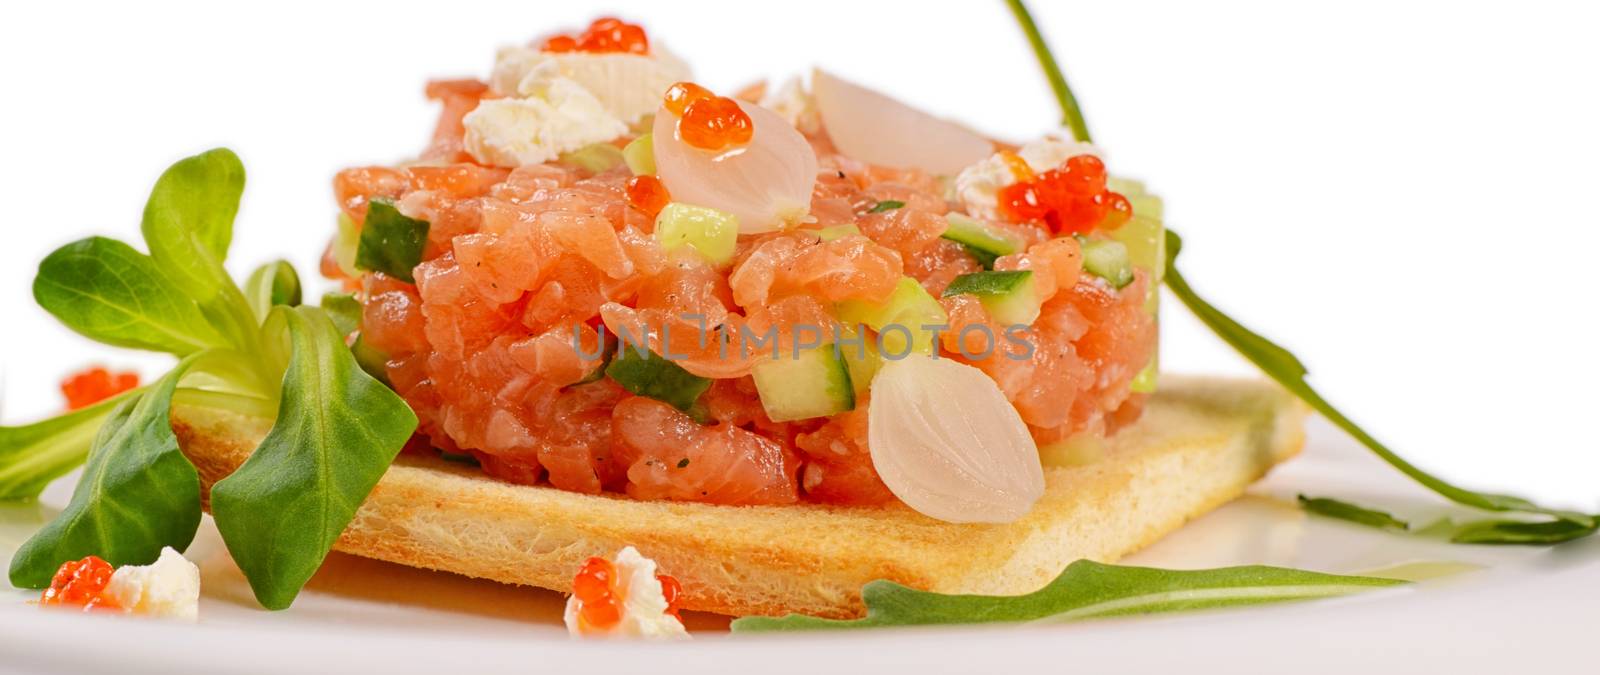 The tartare of salmon on a bun close up by SvetaVo